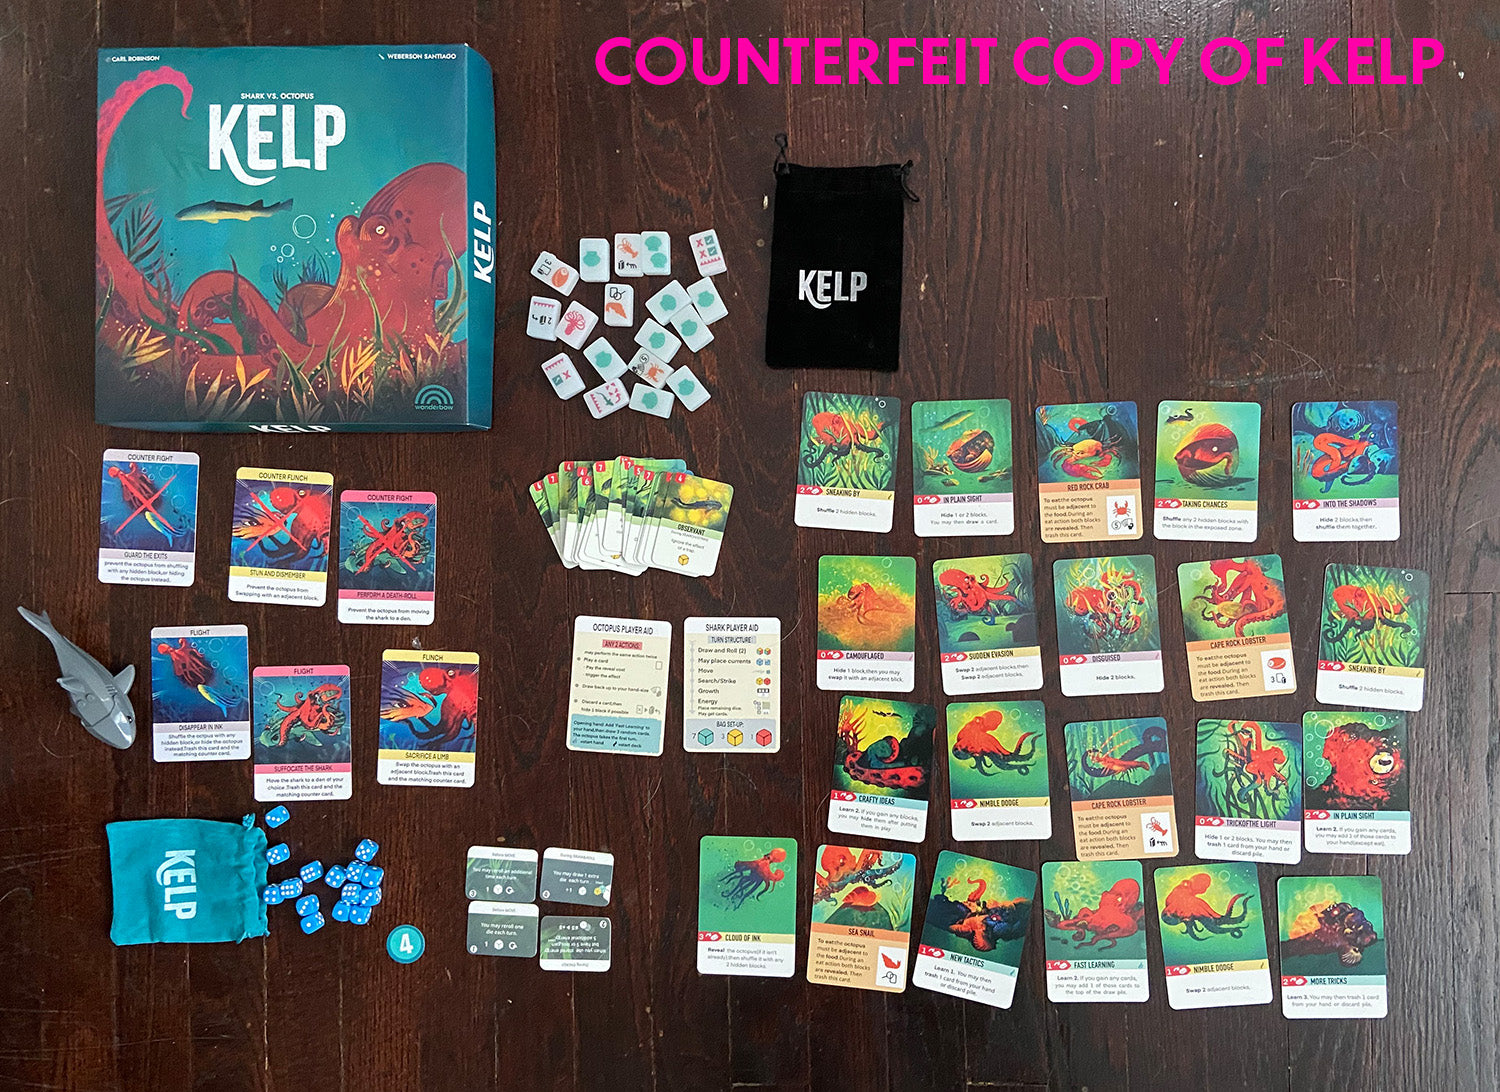 Counterfeit Copy of Kelp